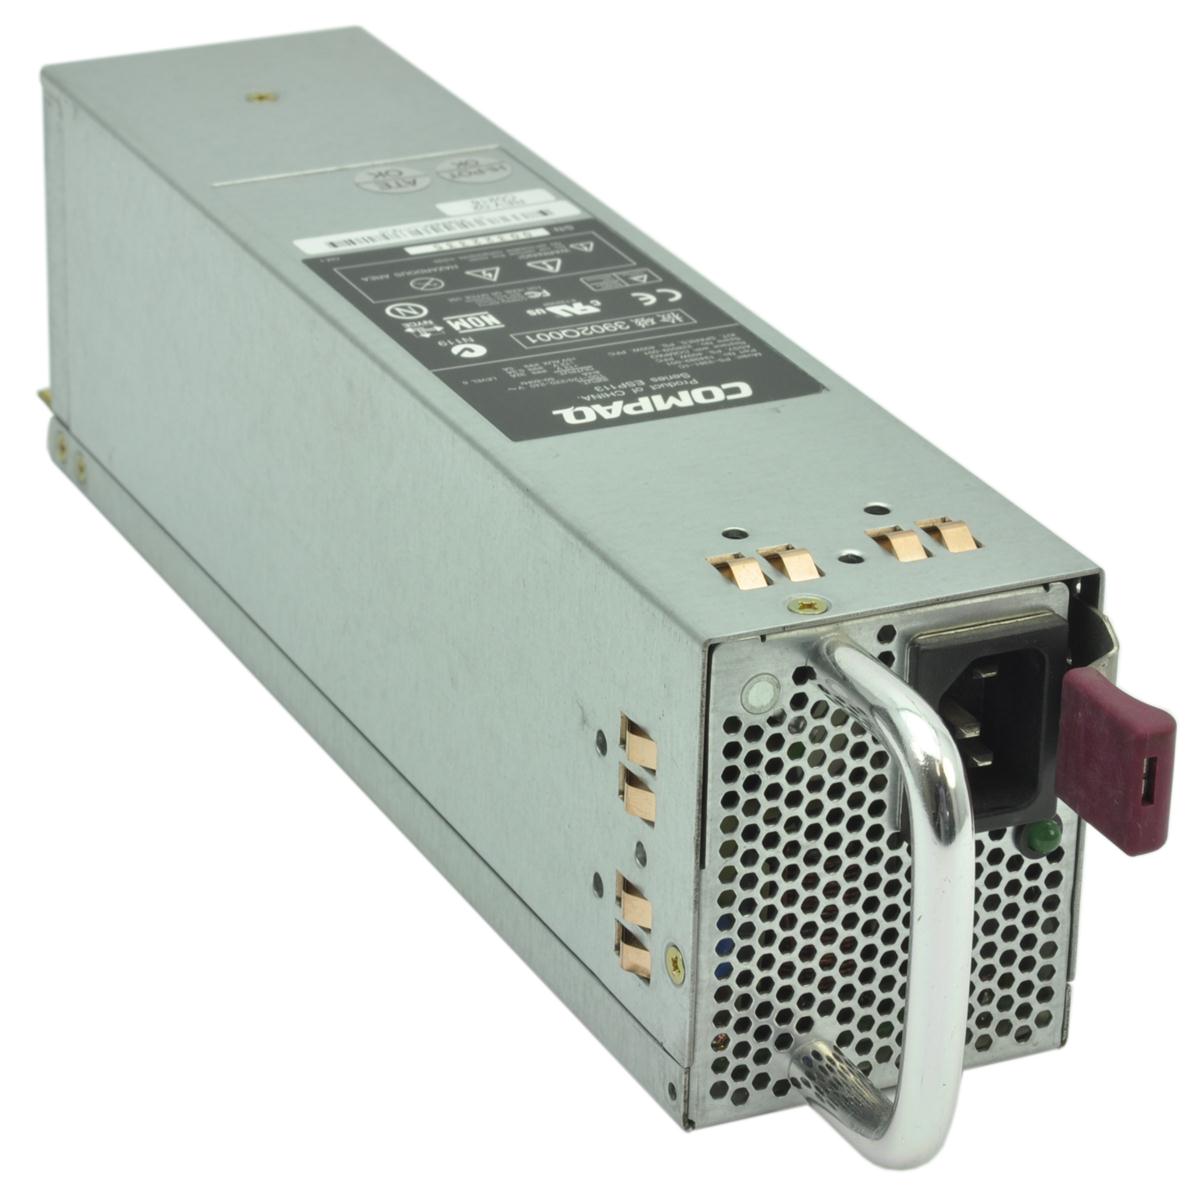 228509-001N HP 400-Watts 100-240V AC Redundant Hot Swap Power Supply with PFC for ProLiant DL380 G2/ G3 Server and StorageWorks NAS B2000 TaskSmart C Series